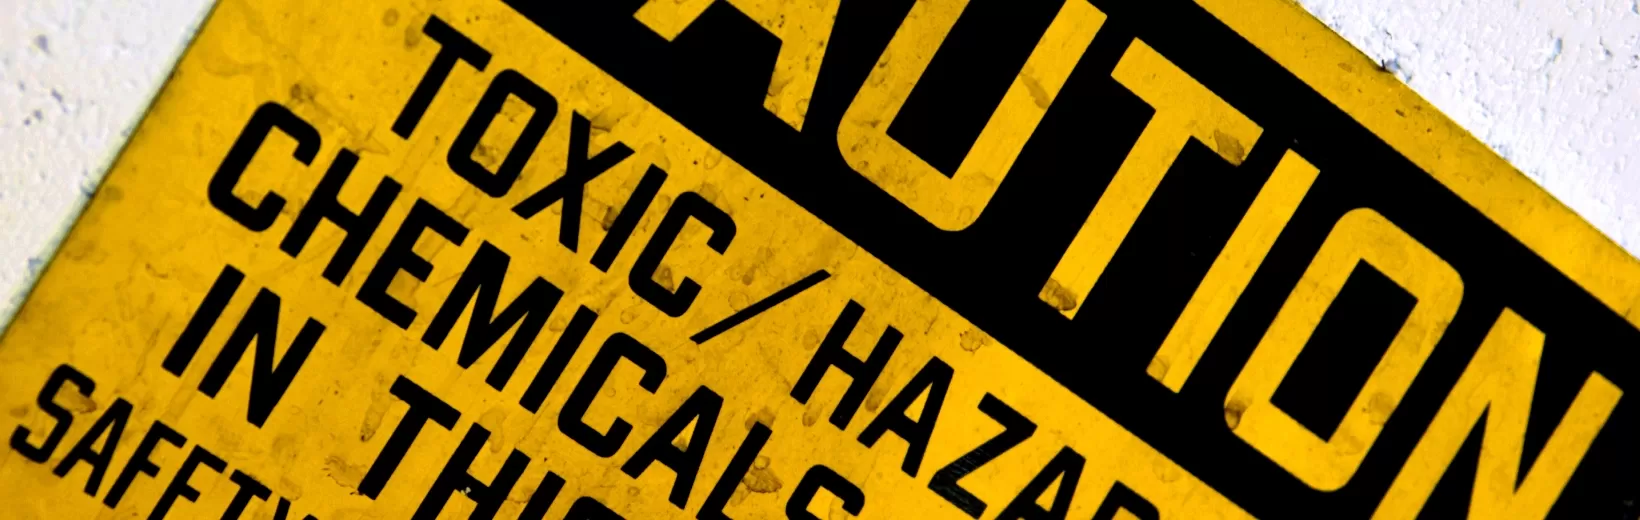 Caution sign for toxic/hazardous chemicals